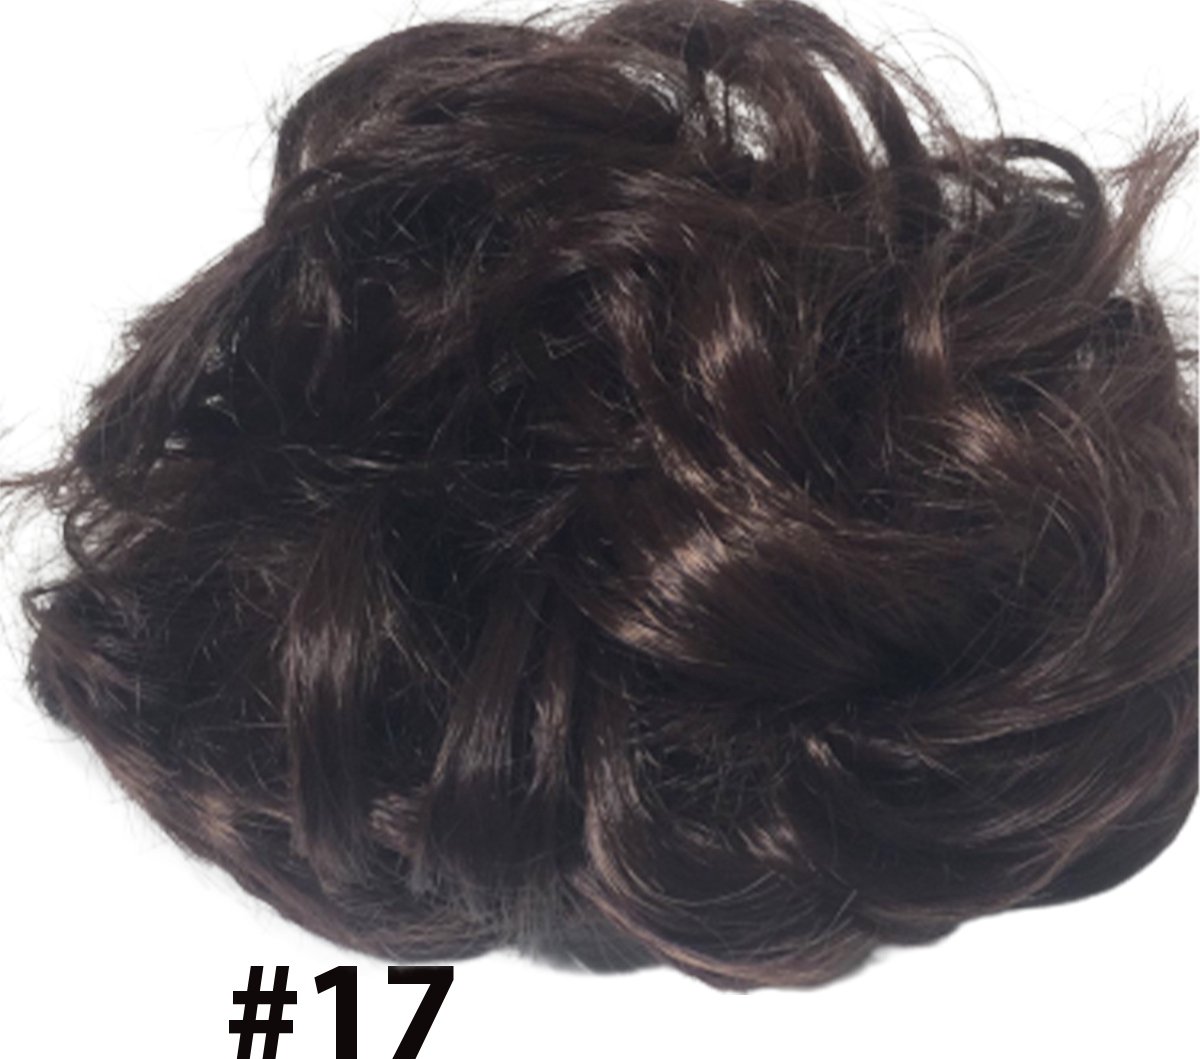 Messy Haarstuk Bun #17 | Haar wrap extension | Hair Bun | Messy Bun - 40 Gram